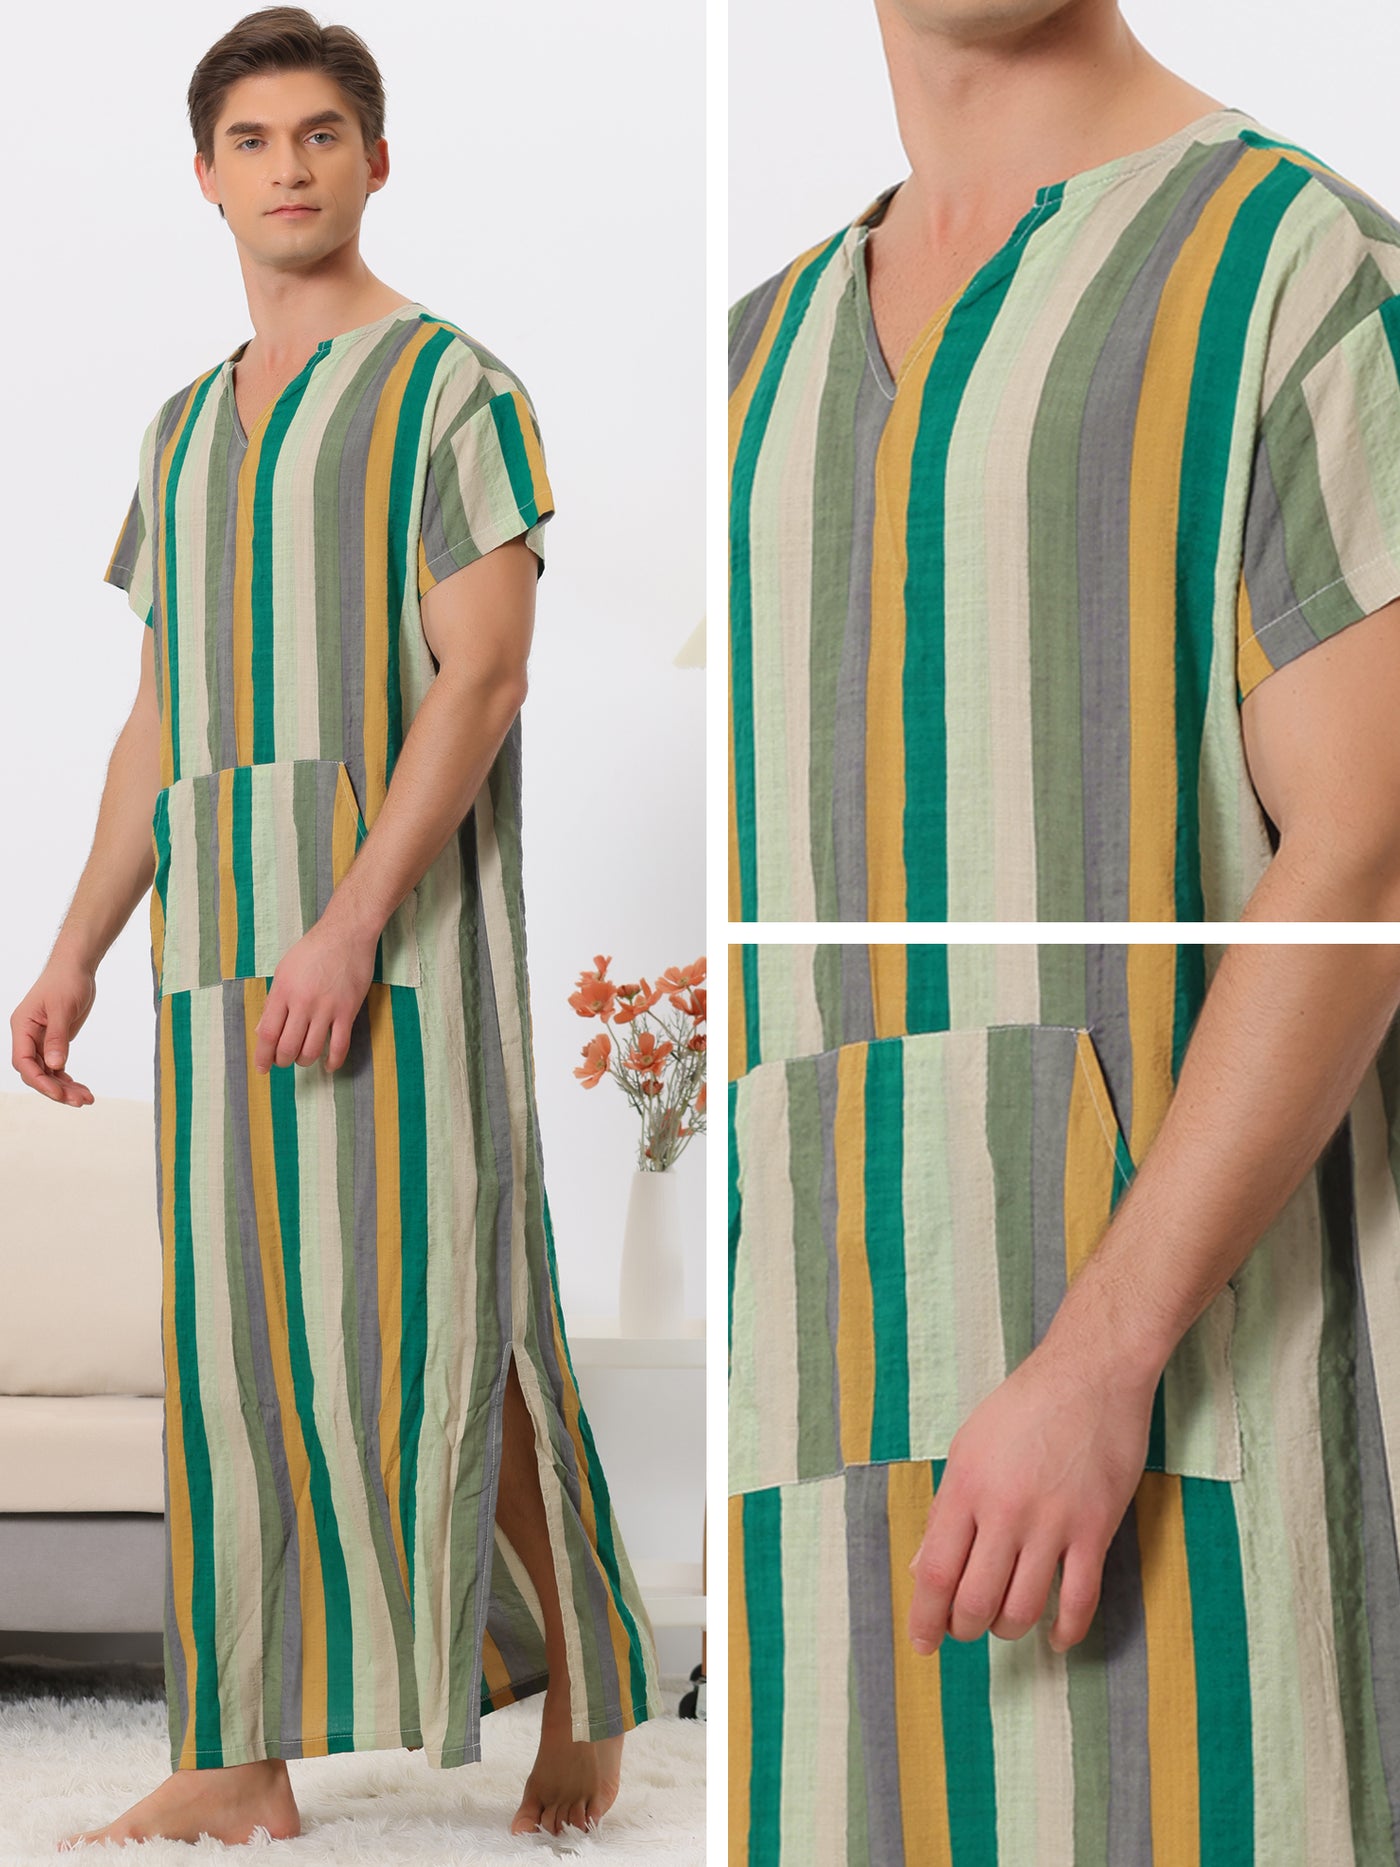 Bublédon Striped Sleep Shirts for Men's V Neck Short Sleeves Color Block Nightshirt